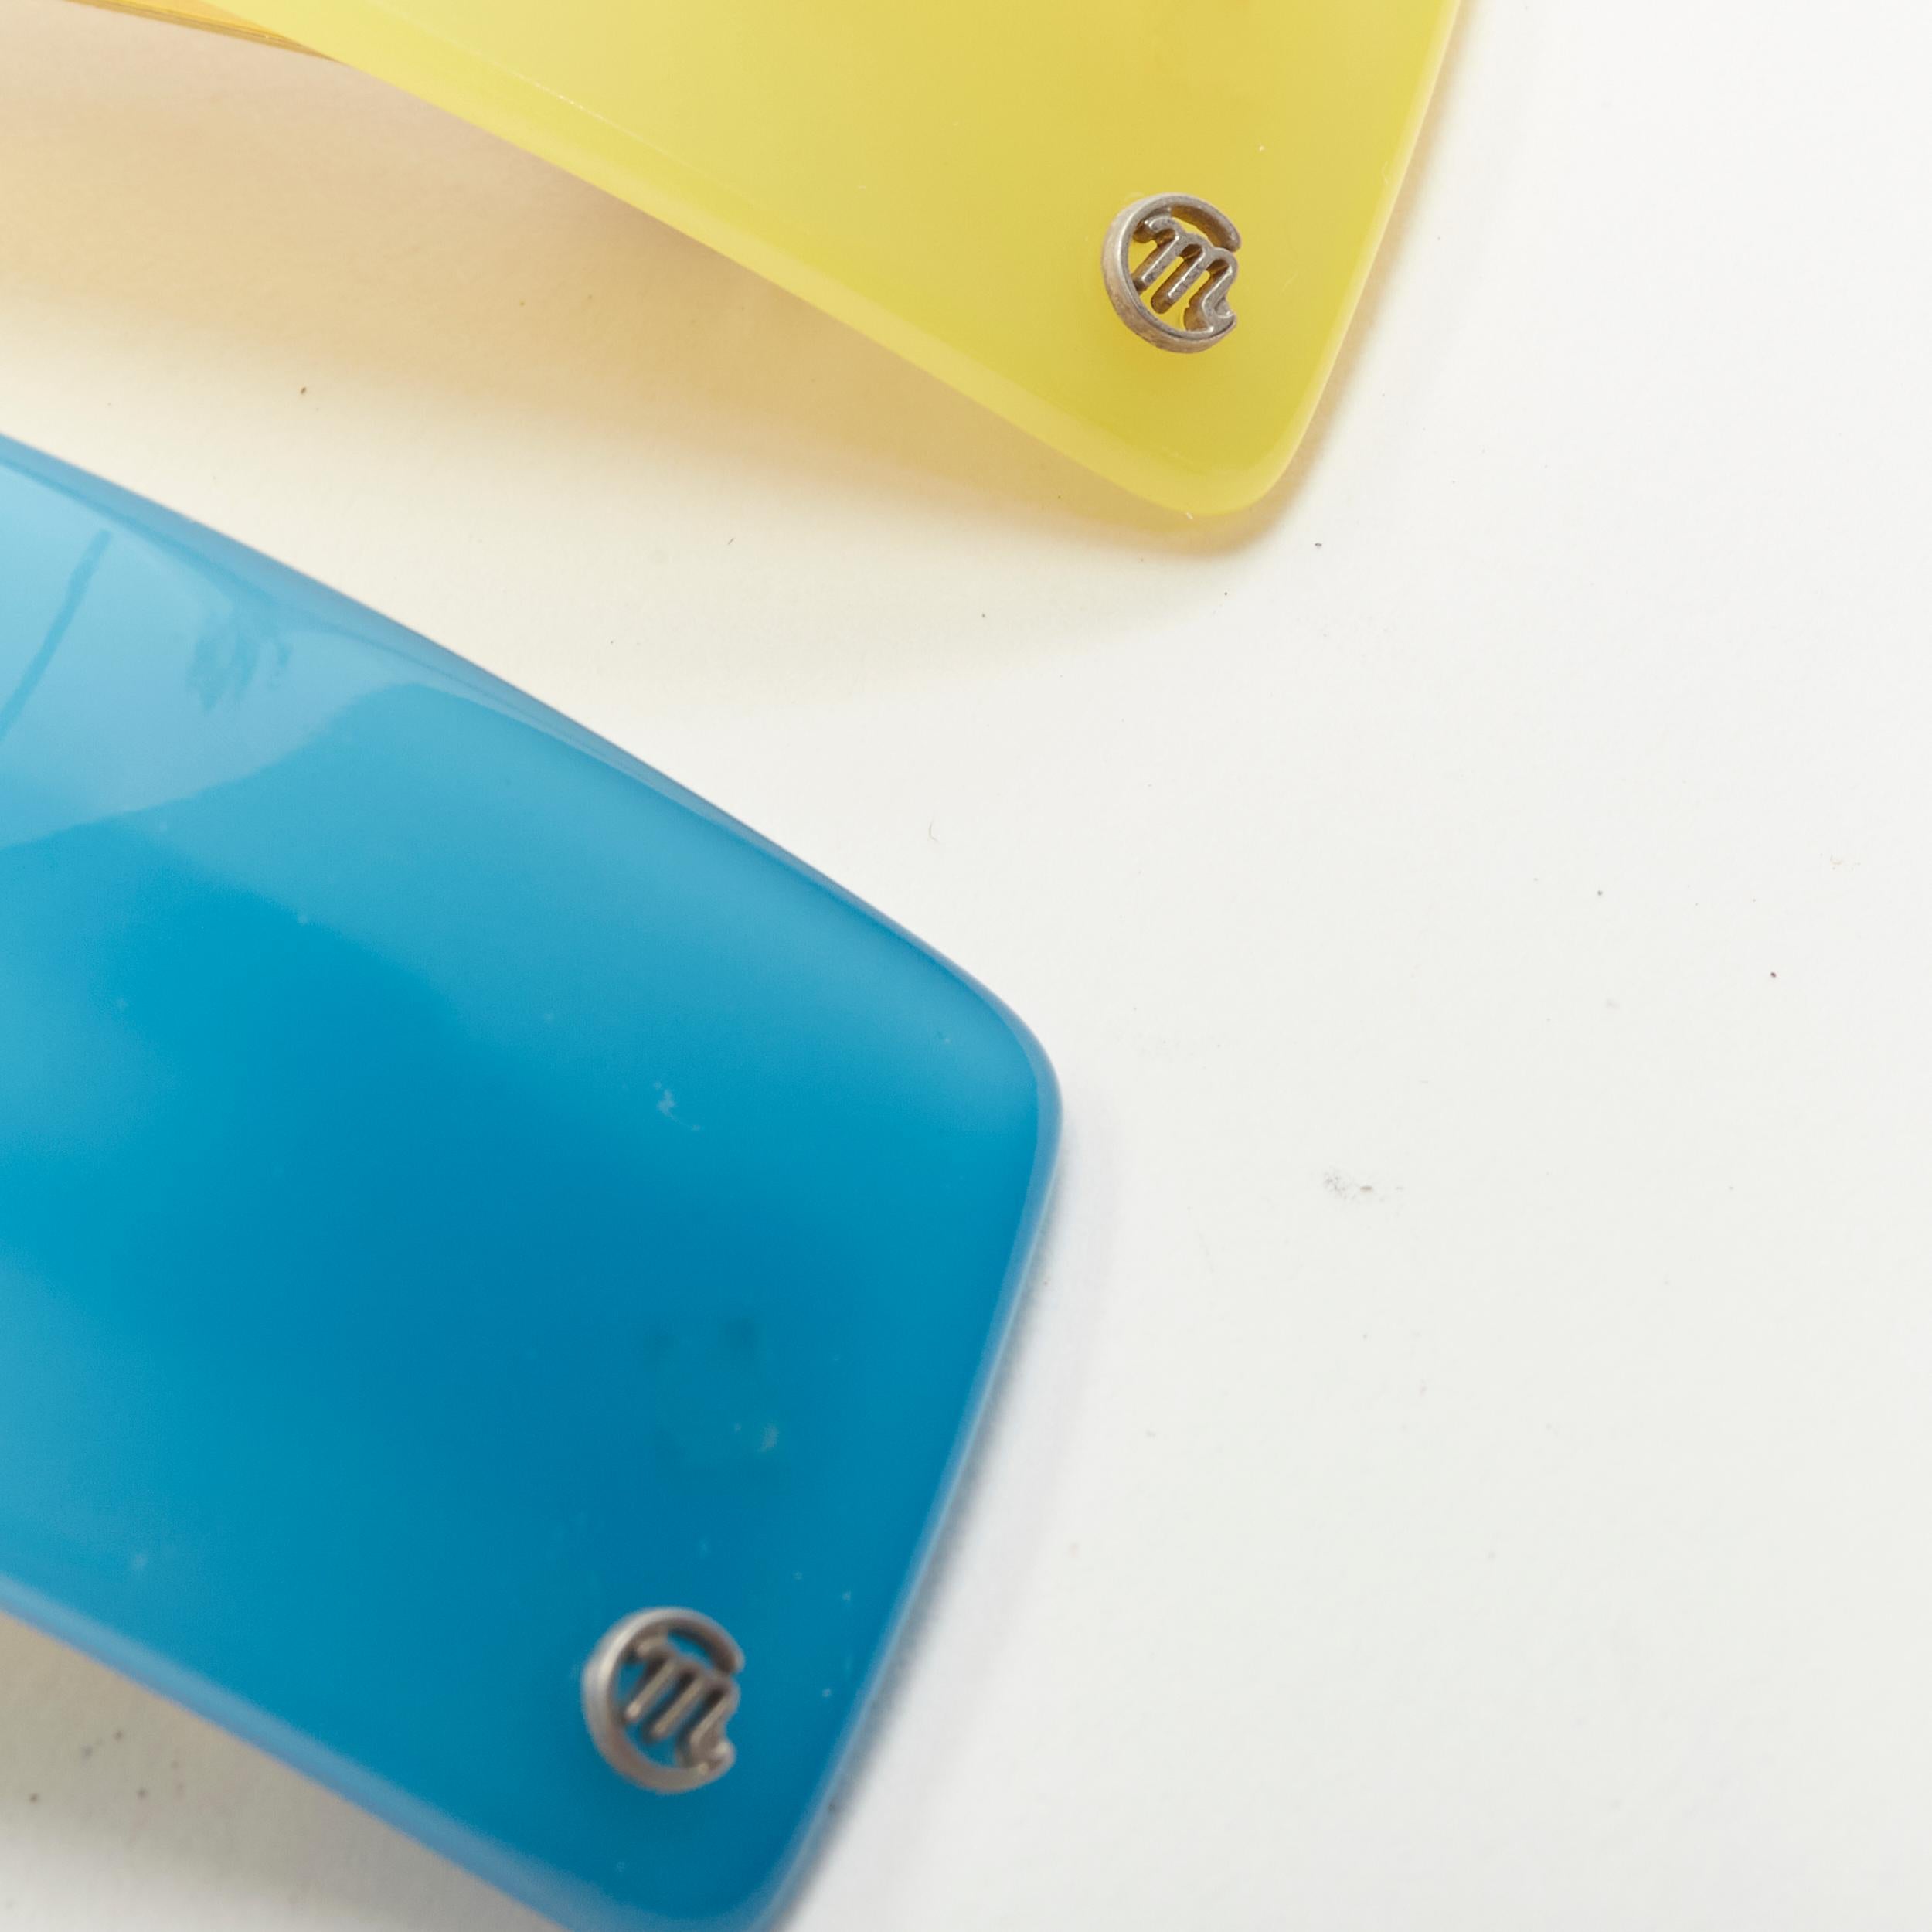 CHIC & MODE Alexandre Zouari Farbe Block glänzende Oberfläche Logo Acryl Clips X3
Referenz: ANWU/A00321
Marke: Alexandre Zouari
Designer: Alexandre Zouari
Collection'S: Chic & Mode
MATERIAL: Acryl, Metall
Farbe: Gelb, Blau
Muster: Solide
Verschluss: